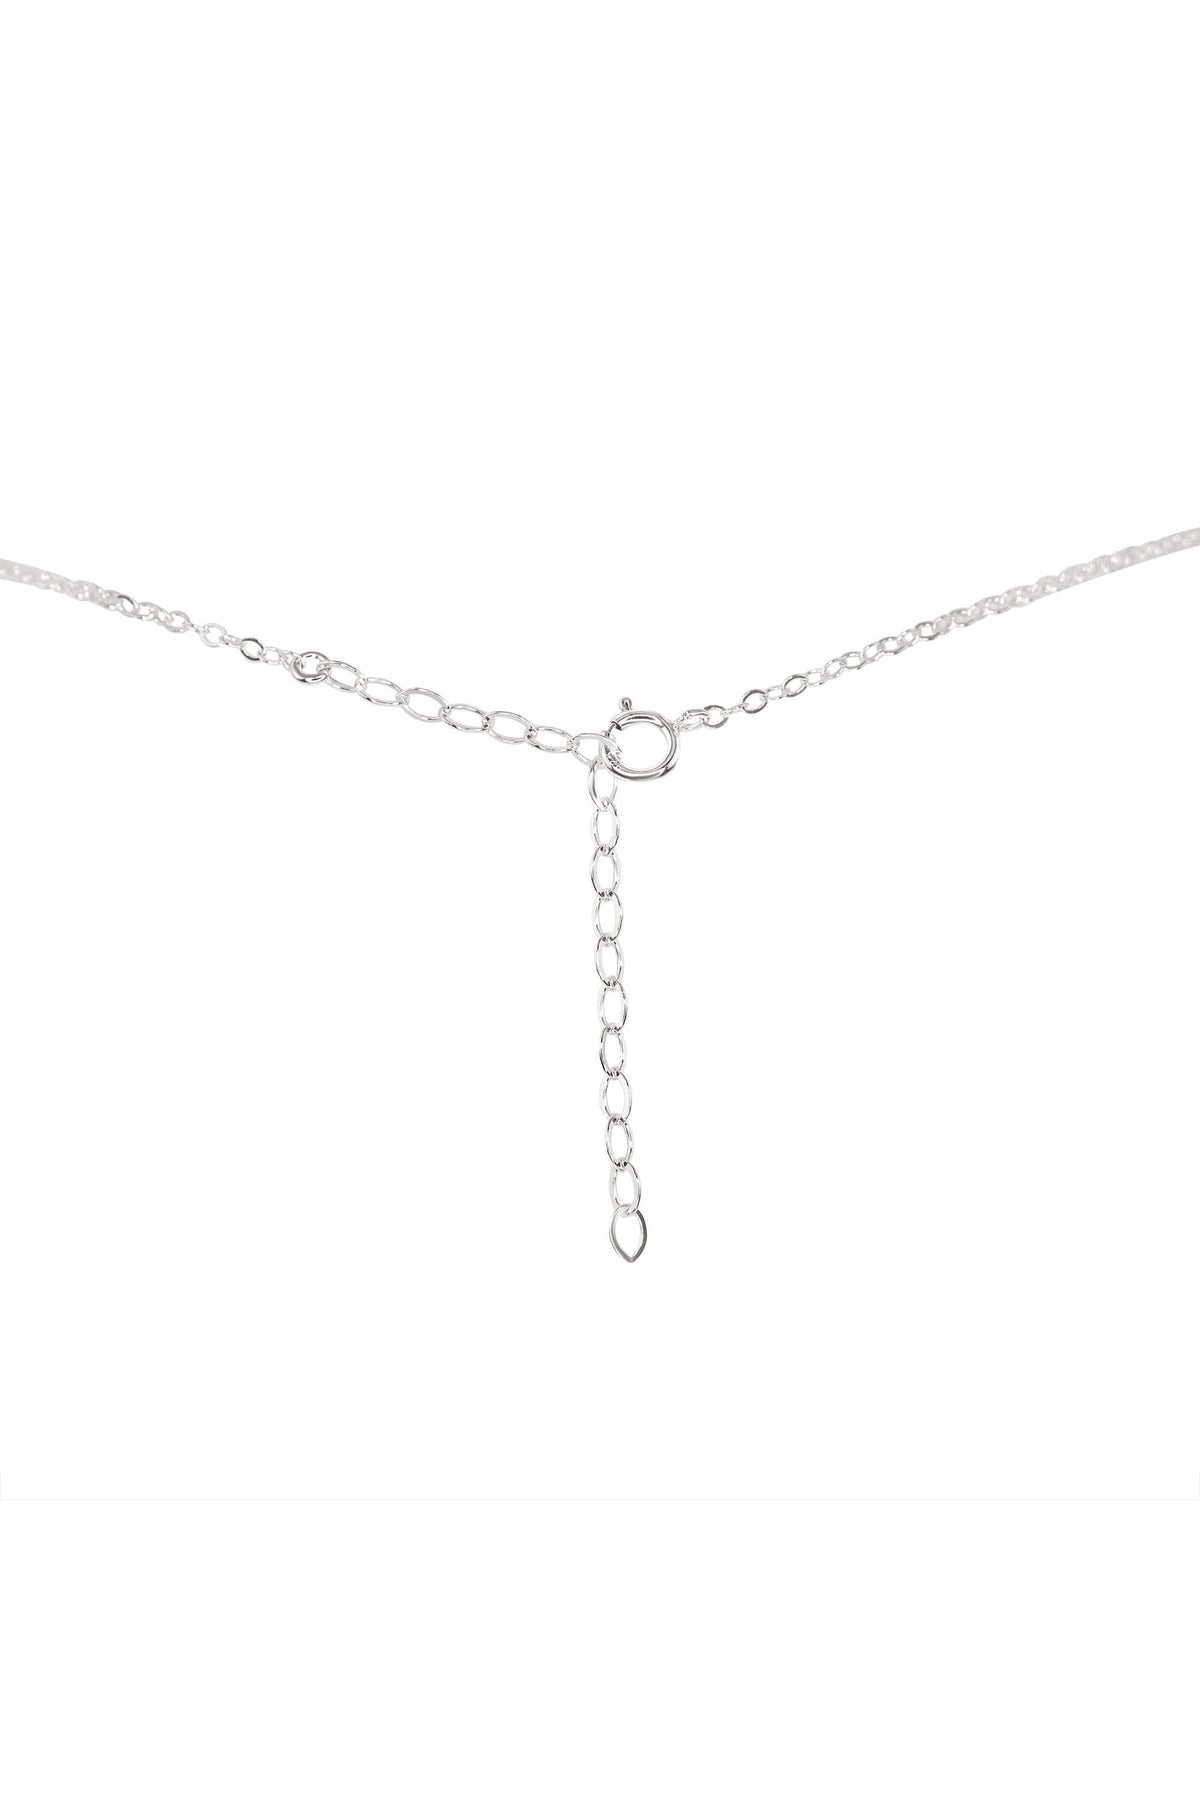 Raw Crystal Pendant Choker - Rose Quartz - Sterling Silver - Luna Tide Handmade Jewellery